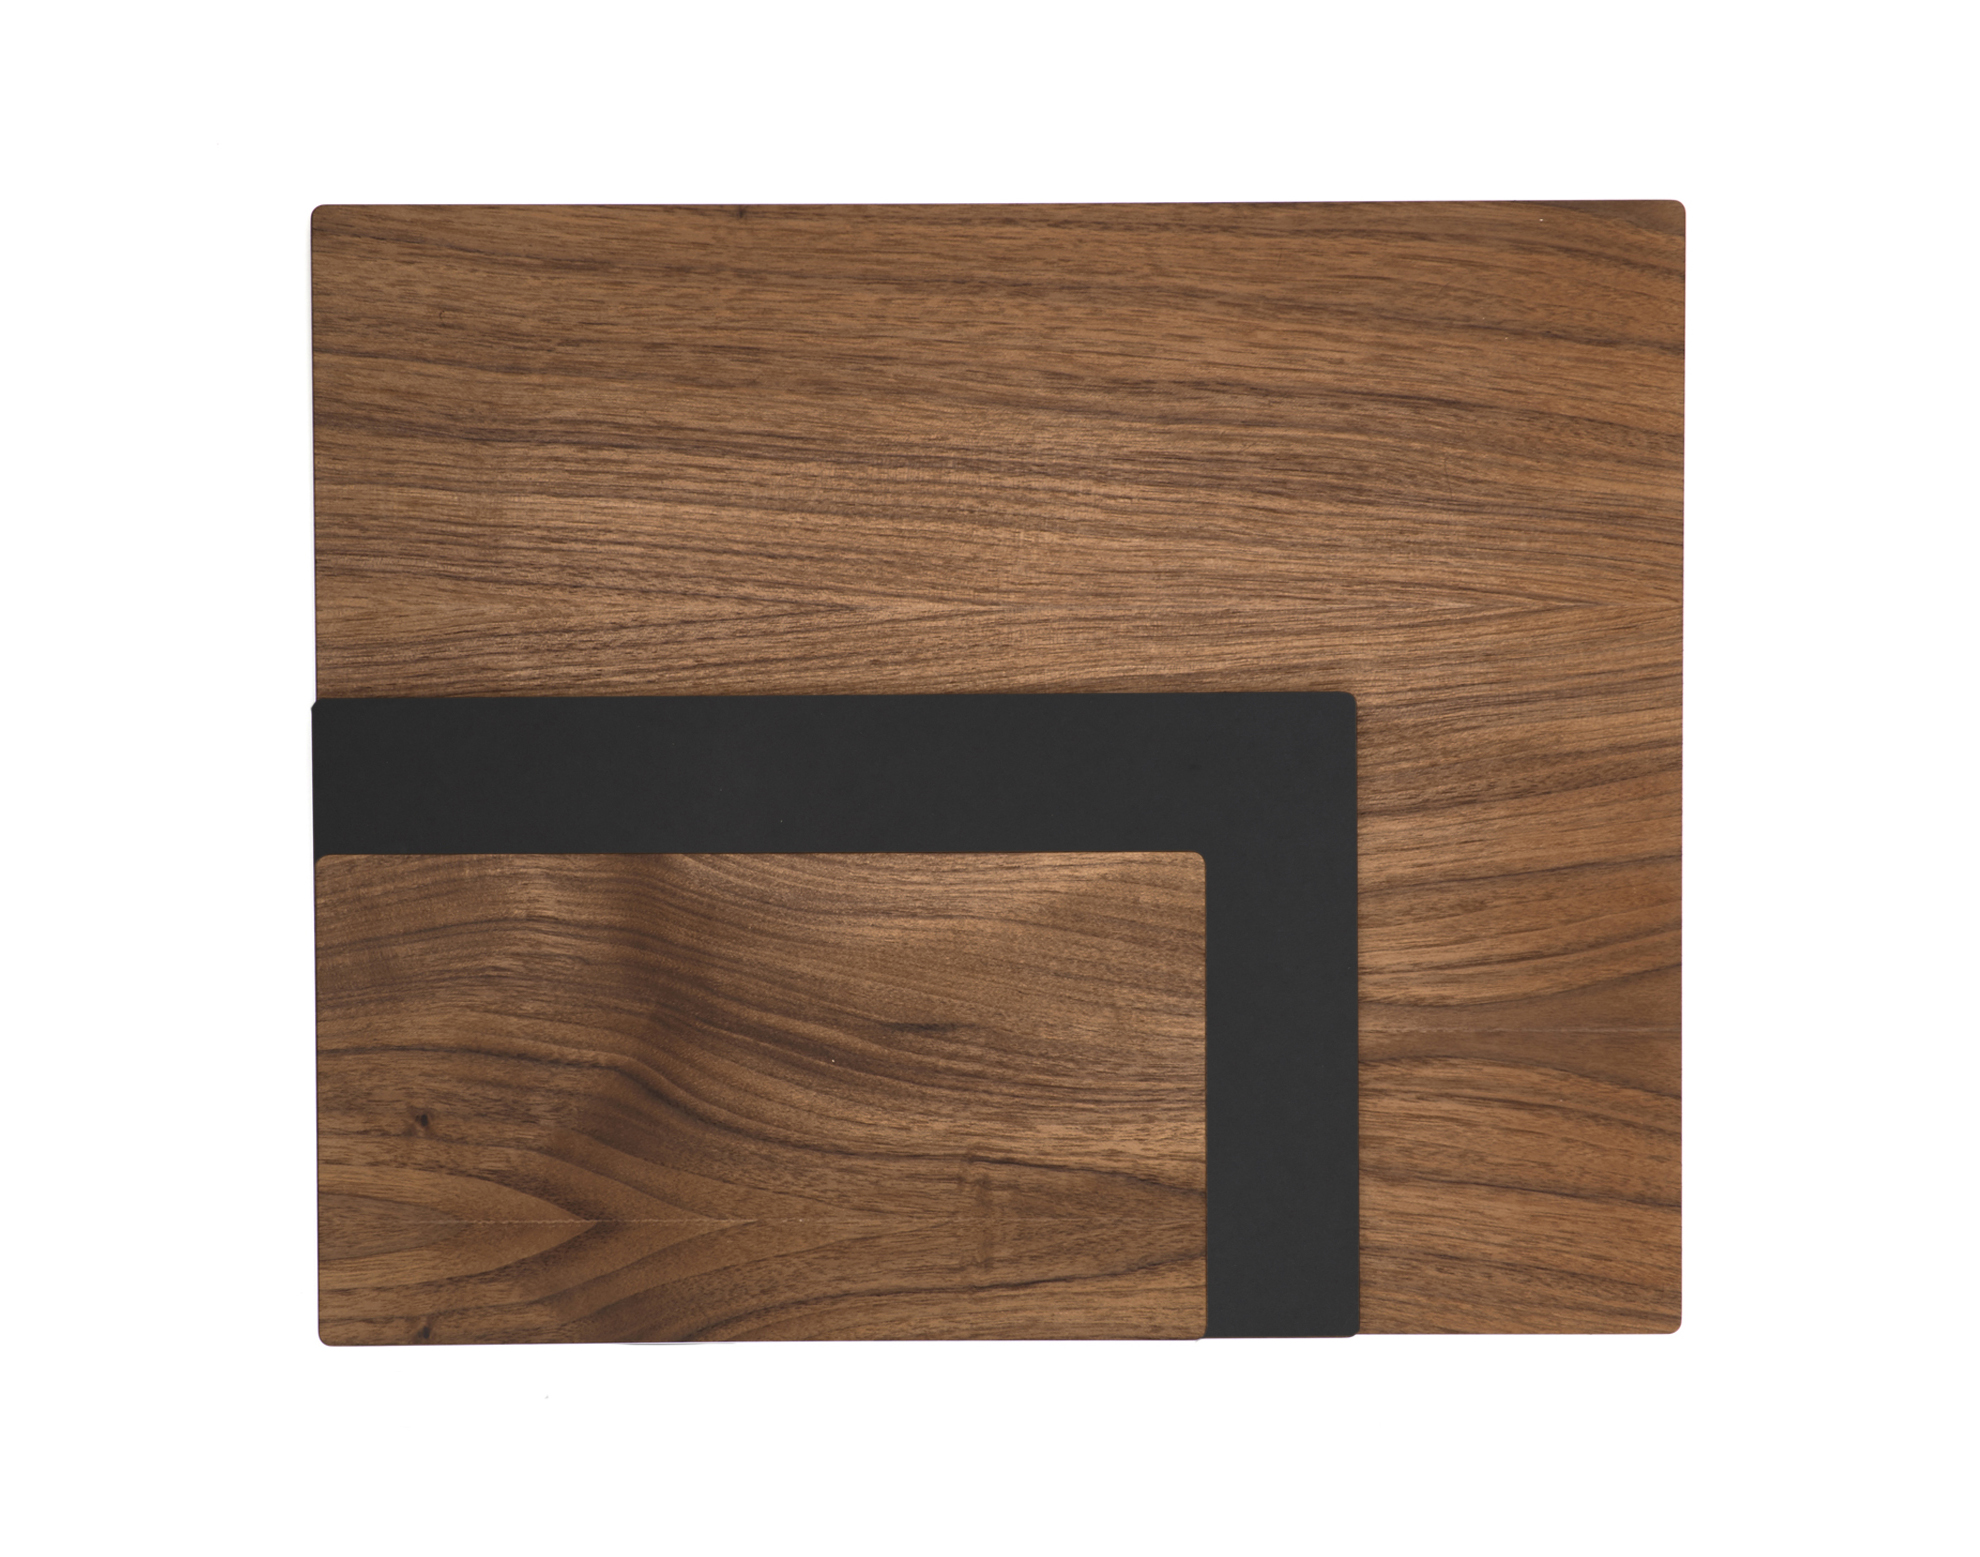 epicurean-serving board-display rectangle series